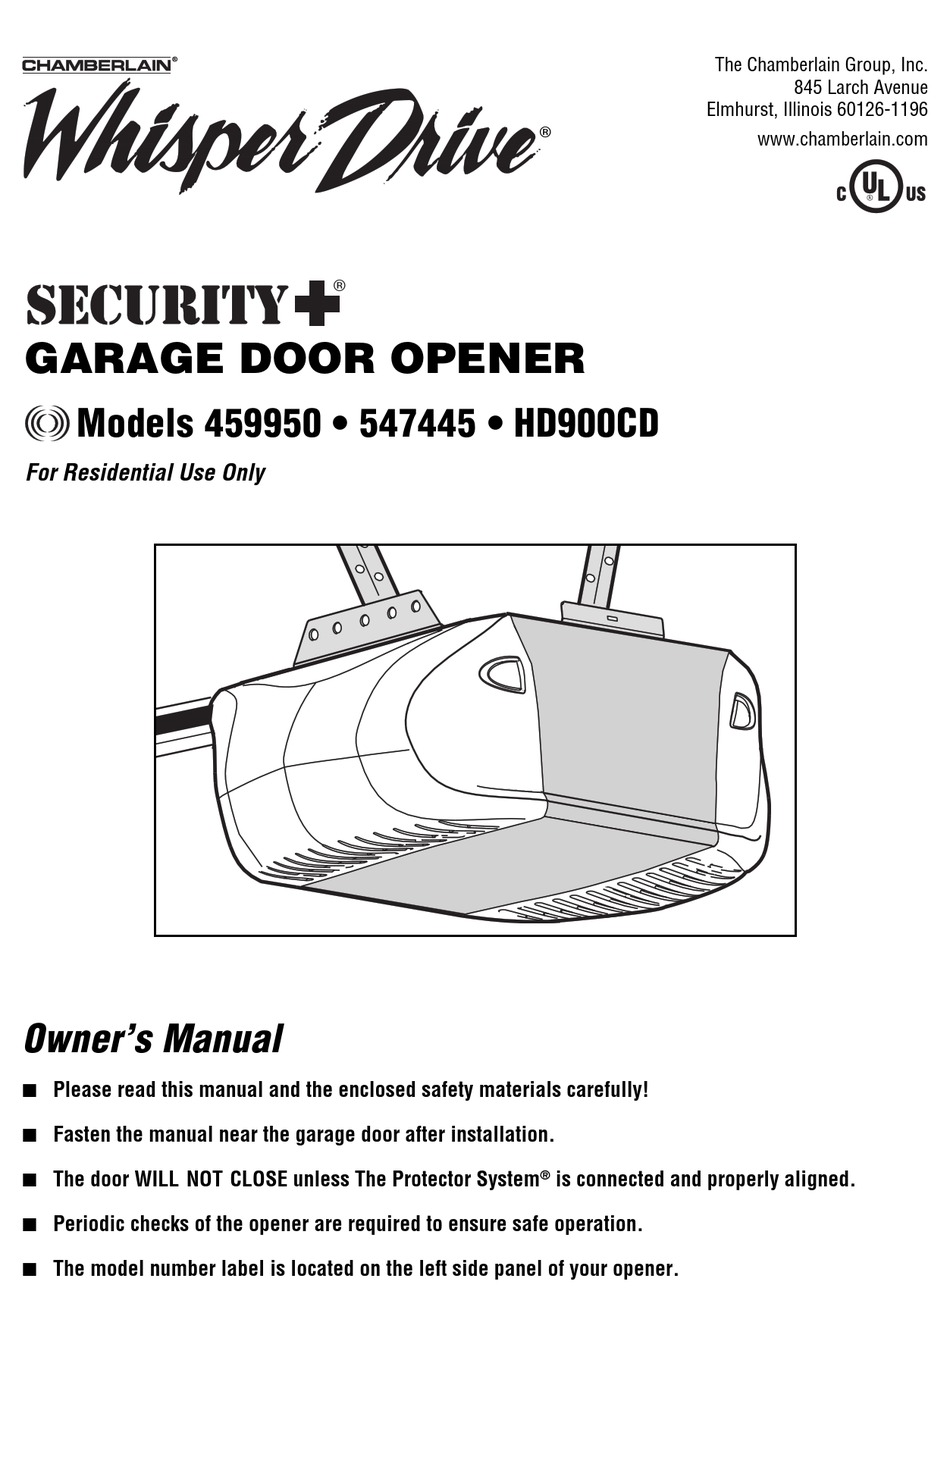 Chamberlain Whisper Drive Security 459950 Owner S Manual Pdf Download Manualslib [ 1476 x 950 Pixel ]